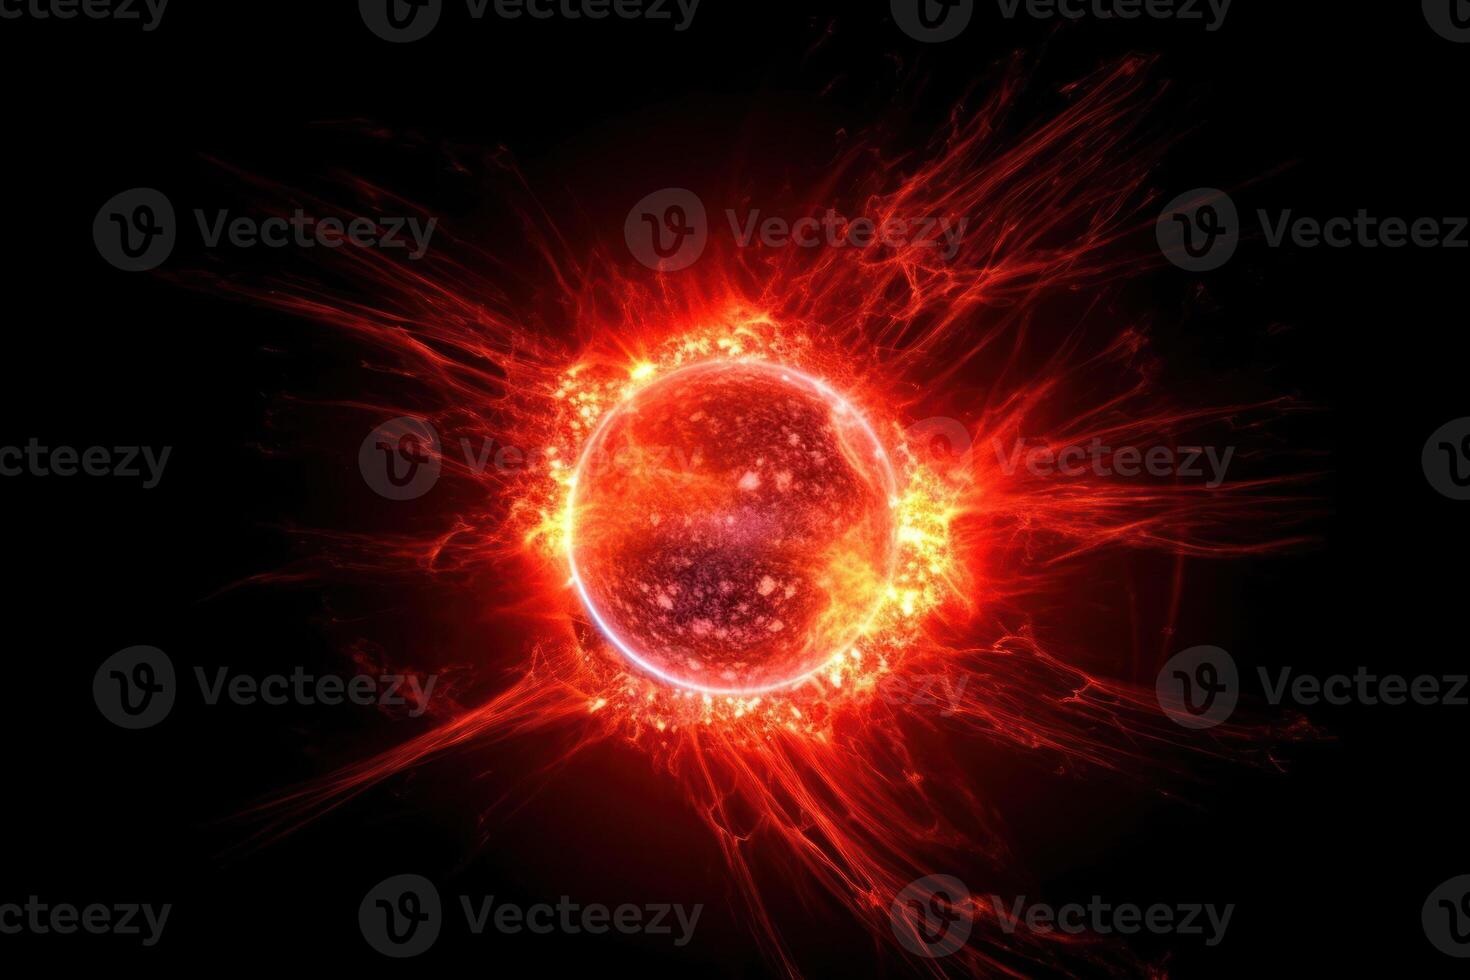 red sun solar flares photo